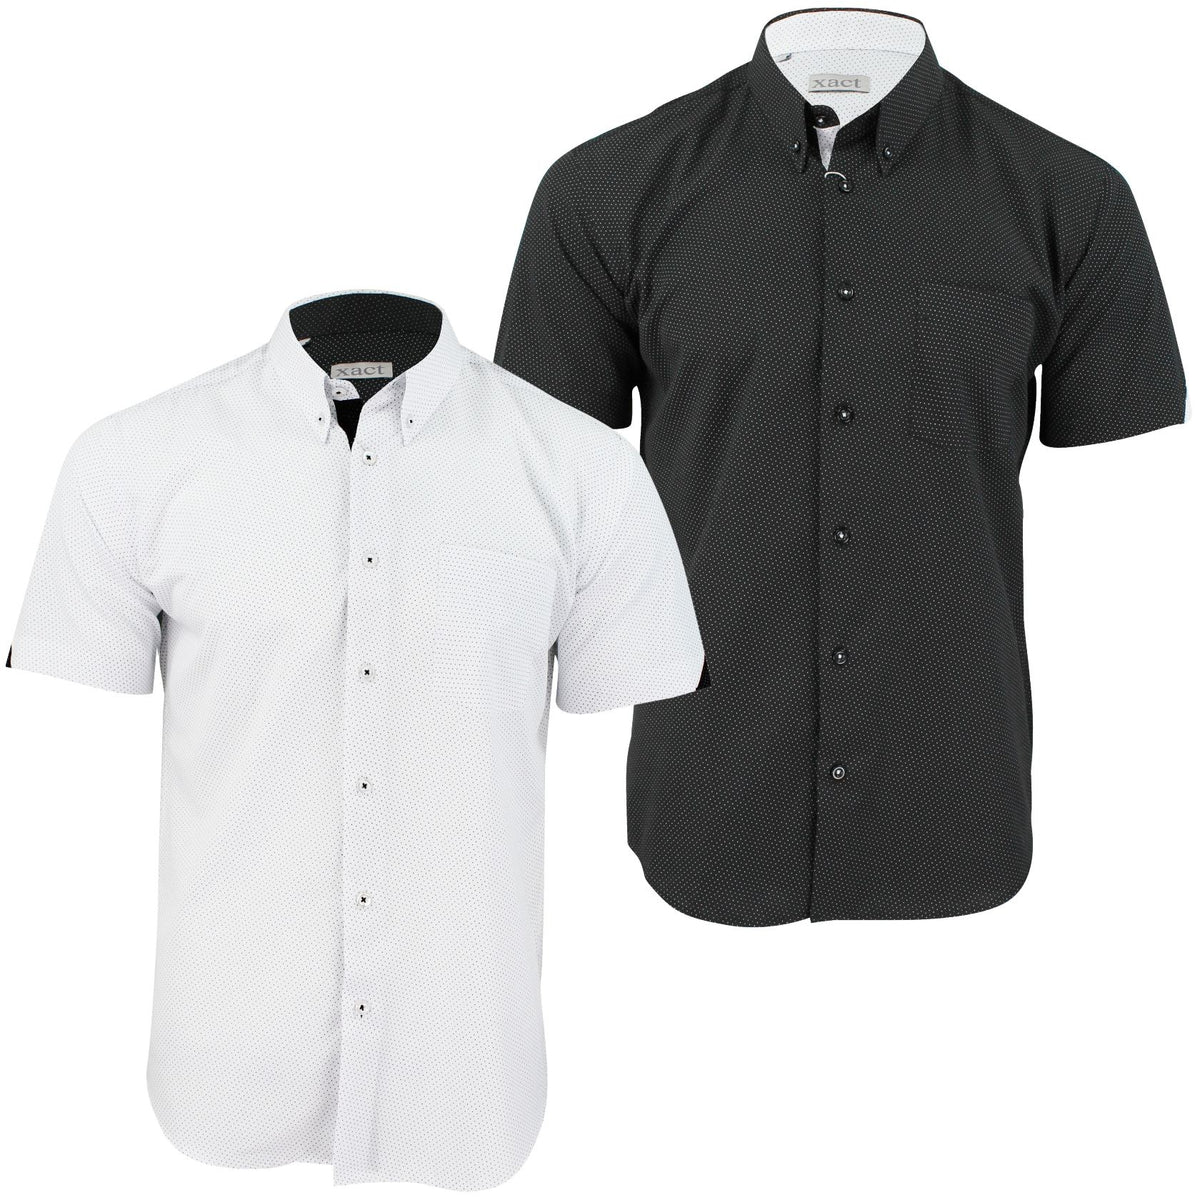 Xact "Mini Polka Dot" Short Sleeved Shirt, 01, K_1510120